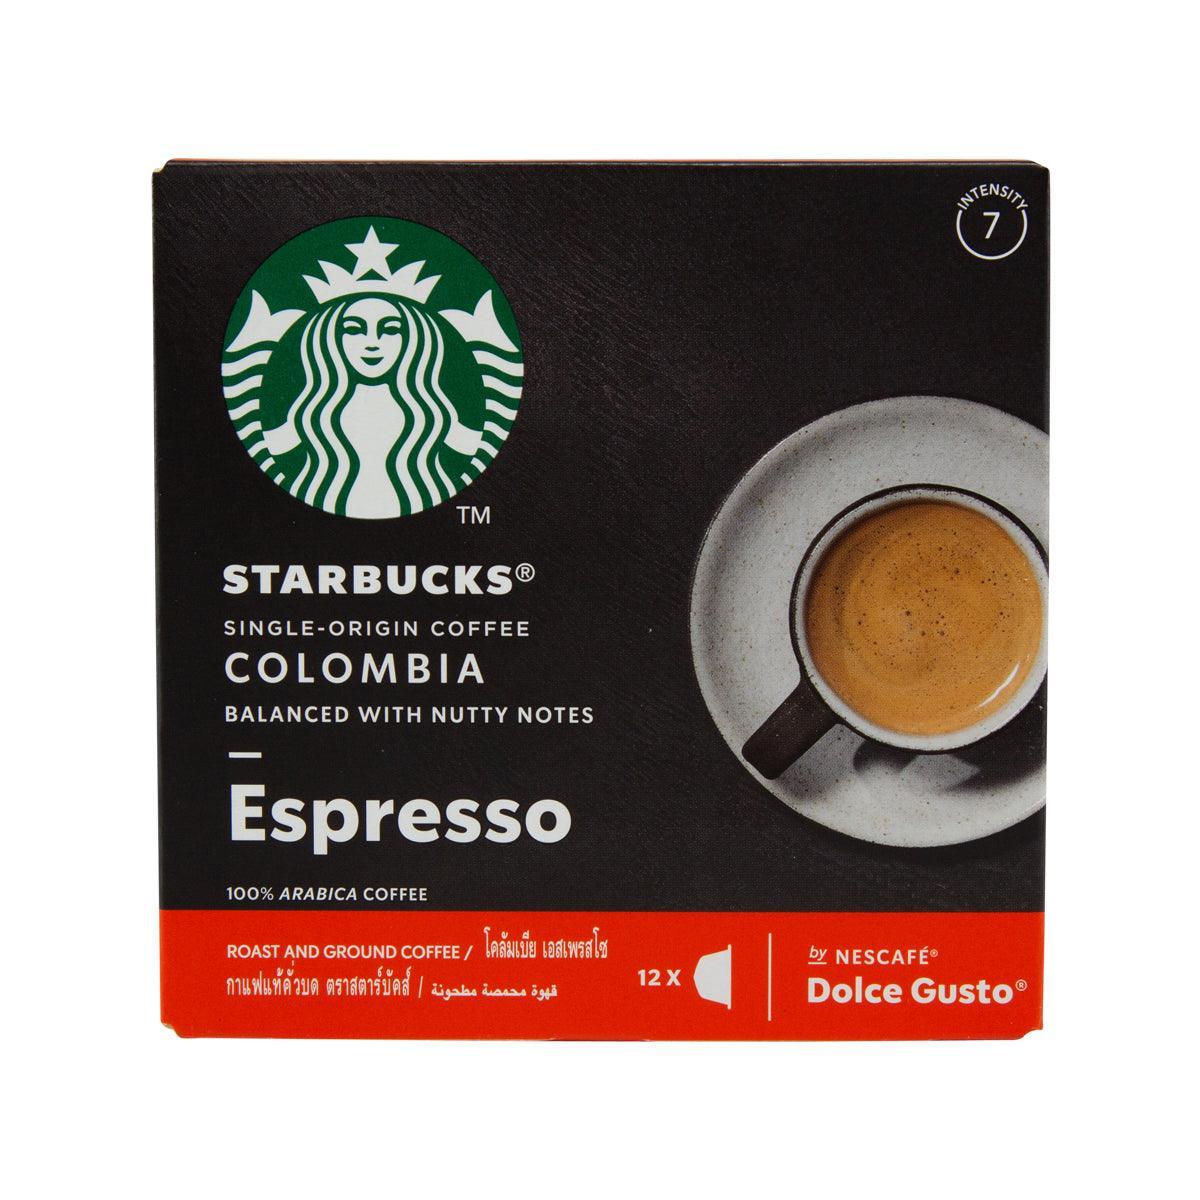 STARBUCKS Starbucks grains single origin colombia 450g 